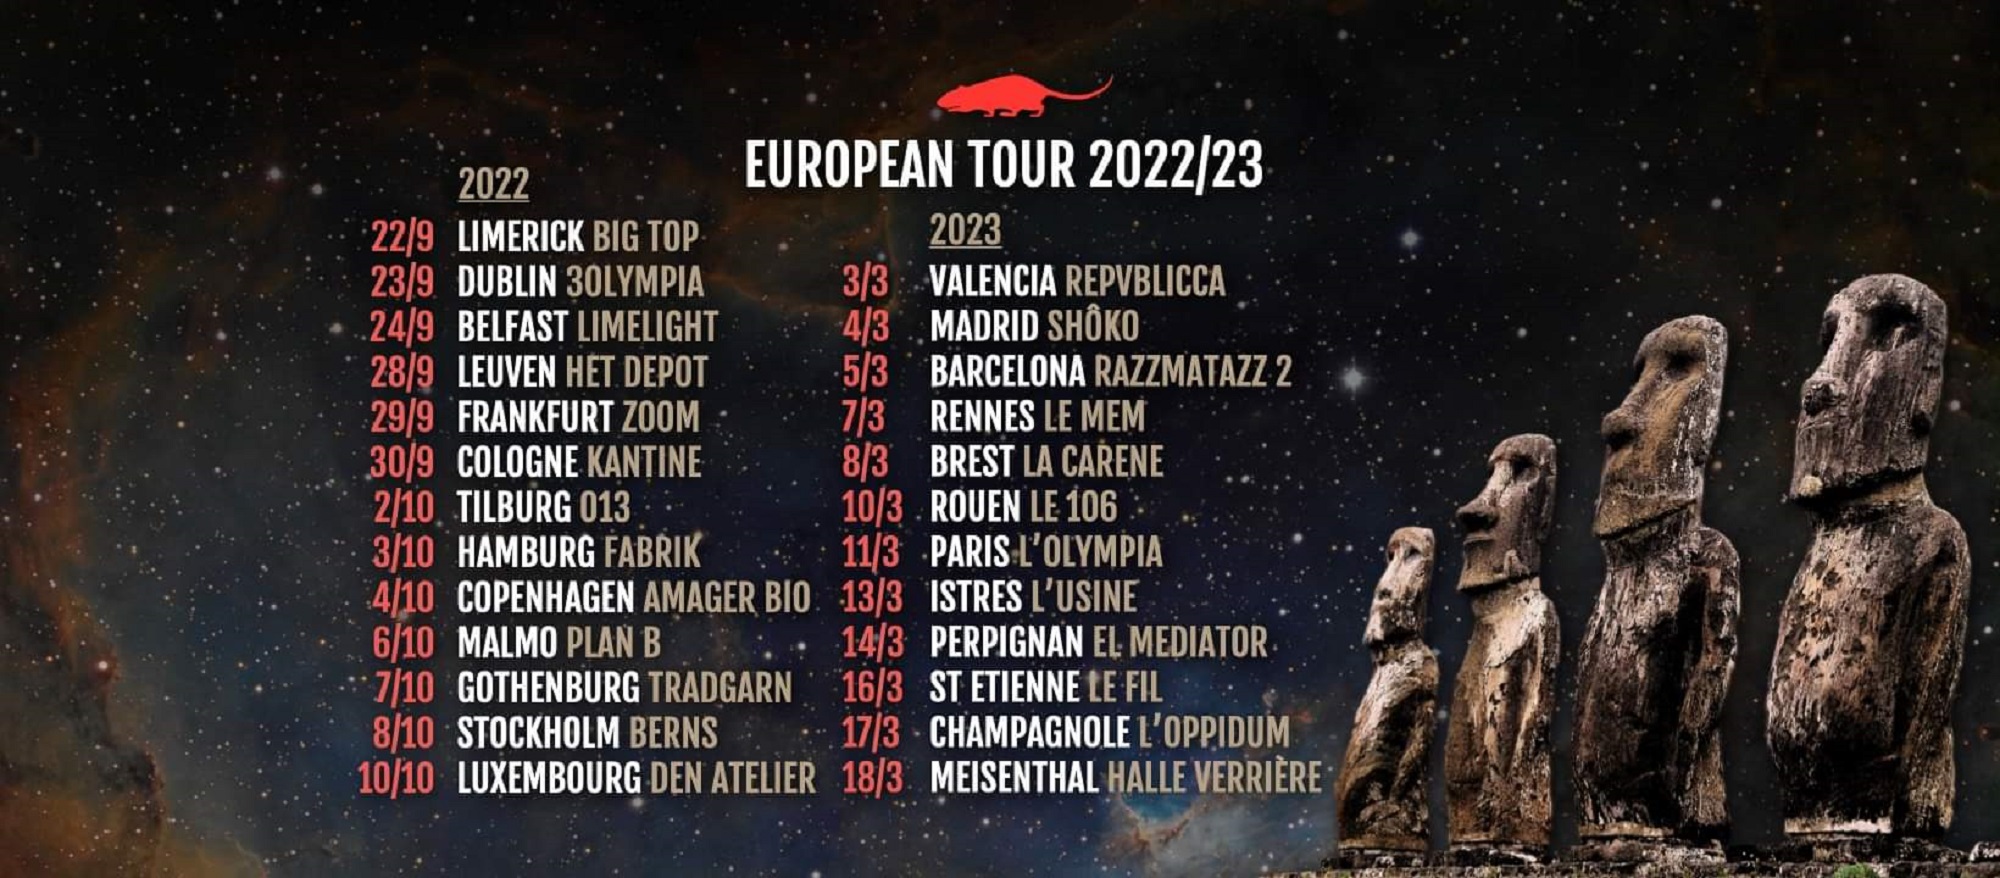 The Stranglers - Europe 22/23